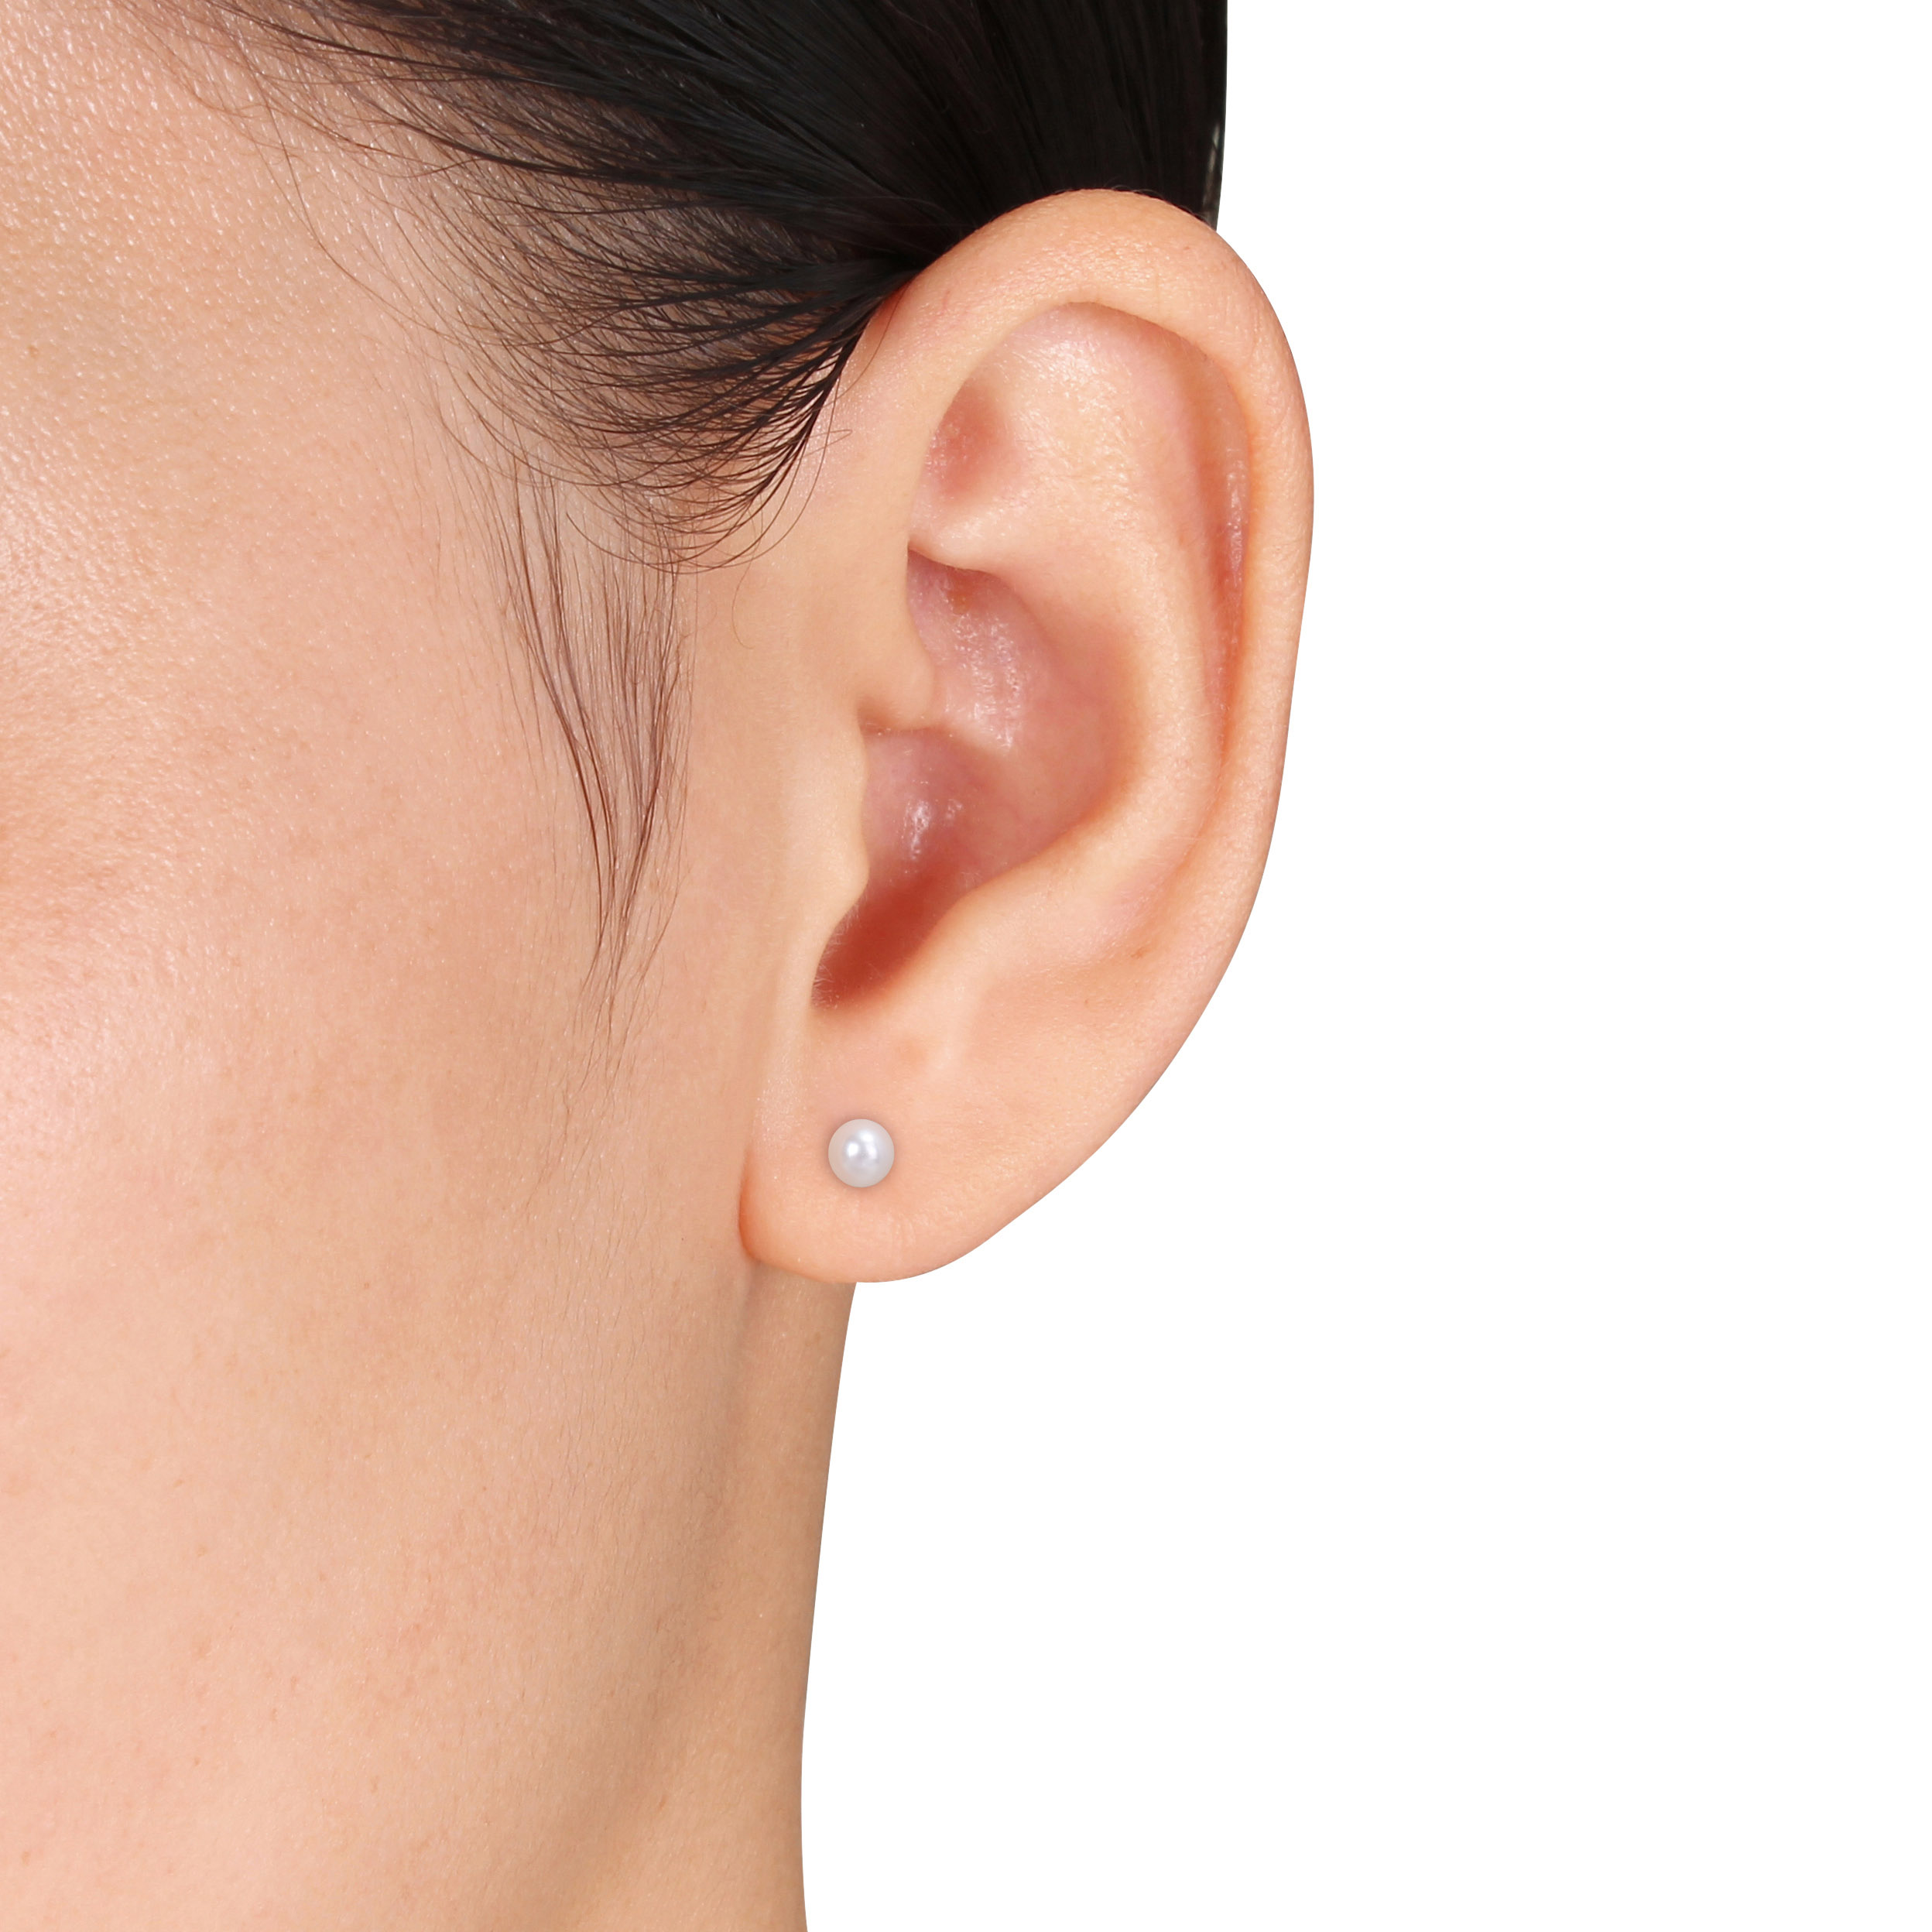 4.5 - 5 MM Freshwater Cultured Pearl Stud Earrings in 14k Yellow Gold